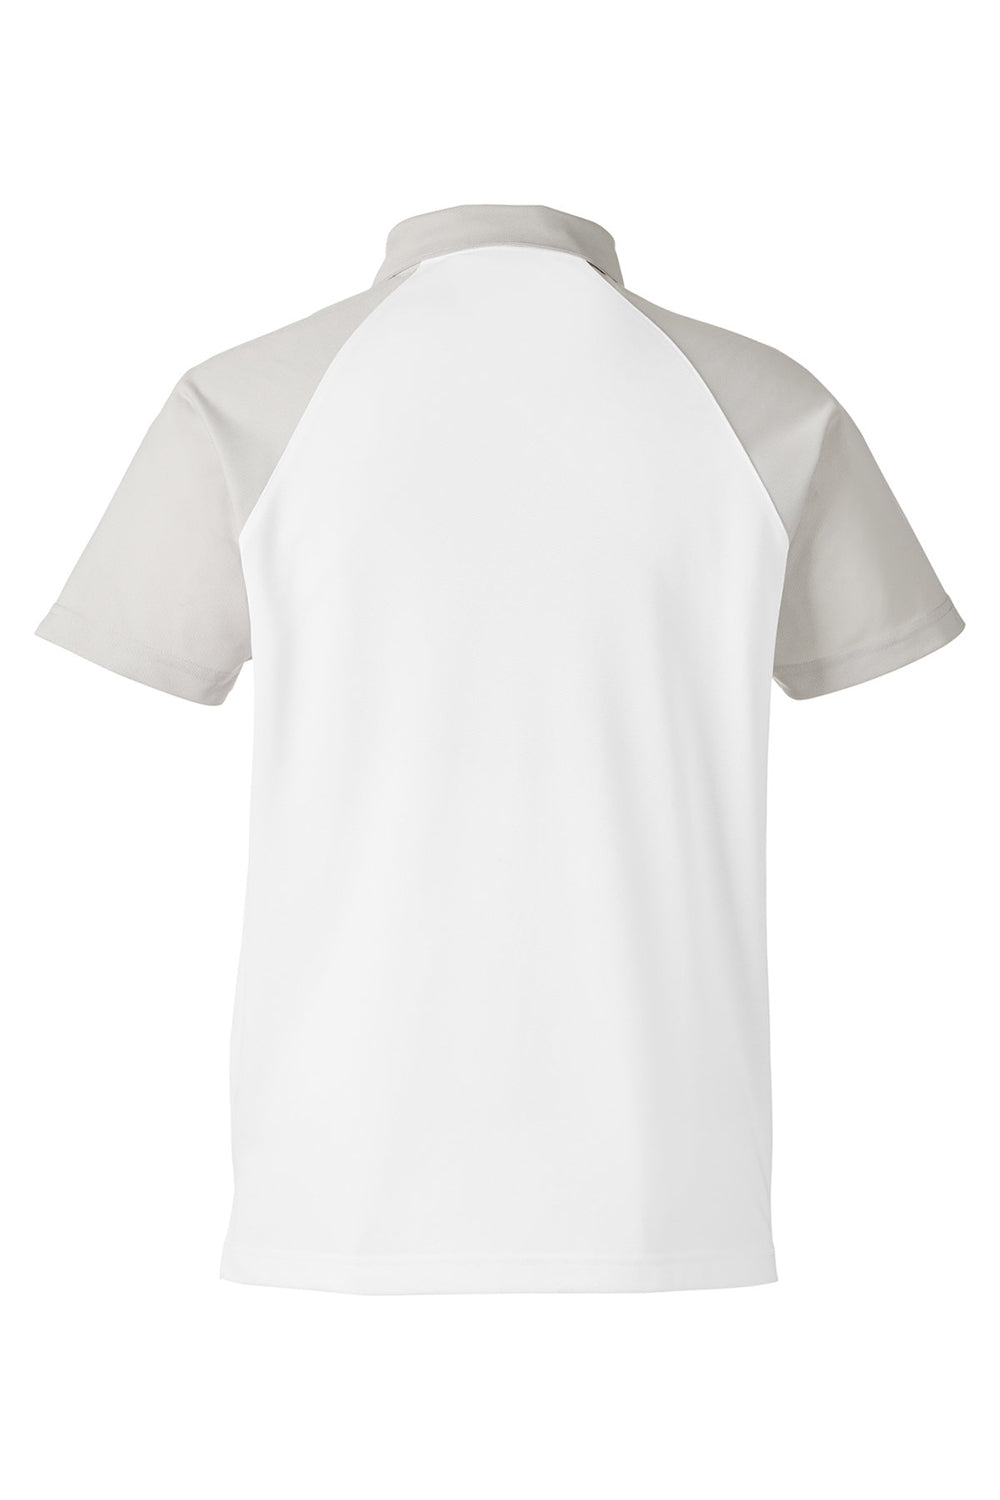 Team 365 TT21C Mens Command Colorblock Moisture Wicking Short Sleeve Polo Shirt White/Silver Grey Flat Back